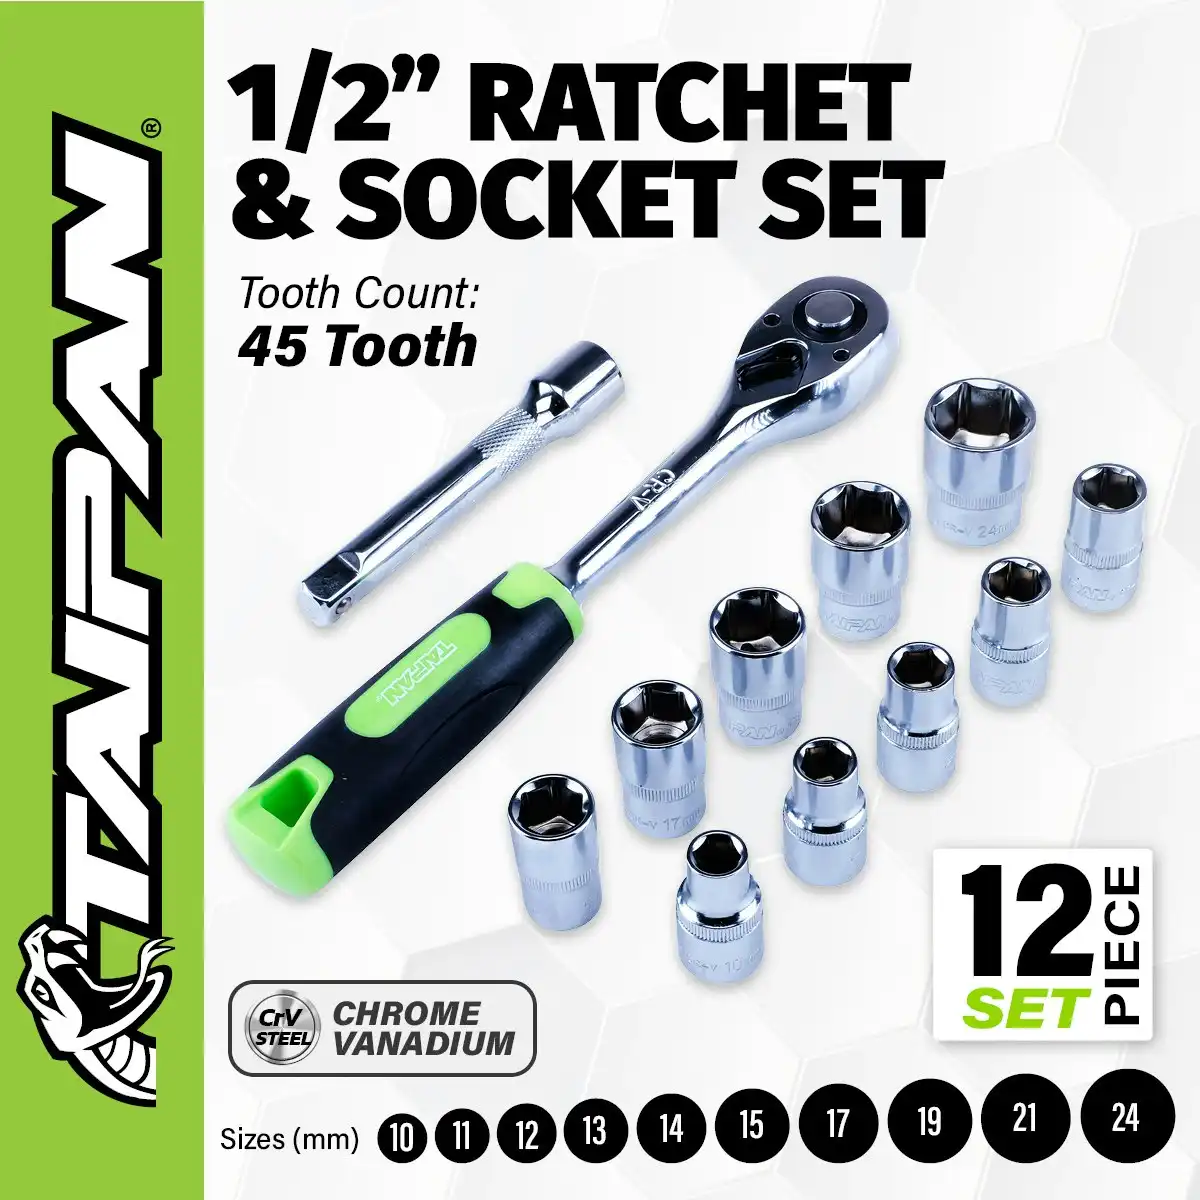 Taipan 12PCE 1/2" Ratchet Socket Set Premium Quality Chrome Vanadium Steel